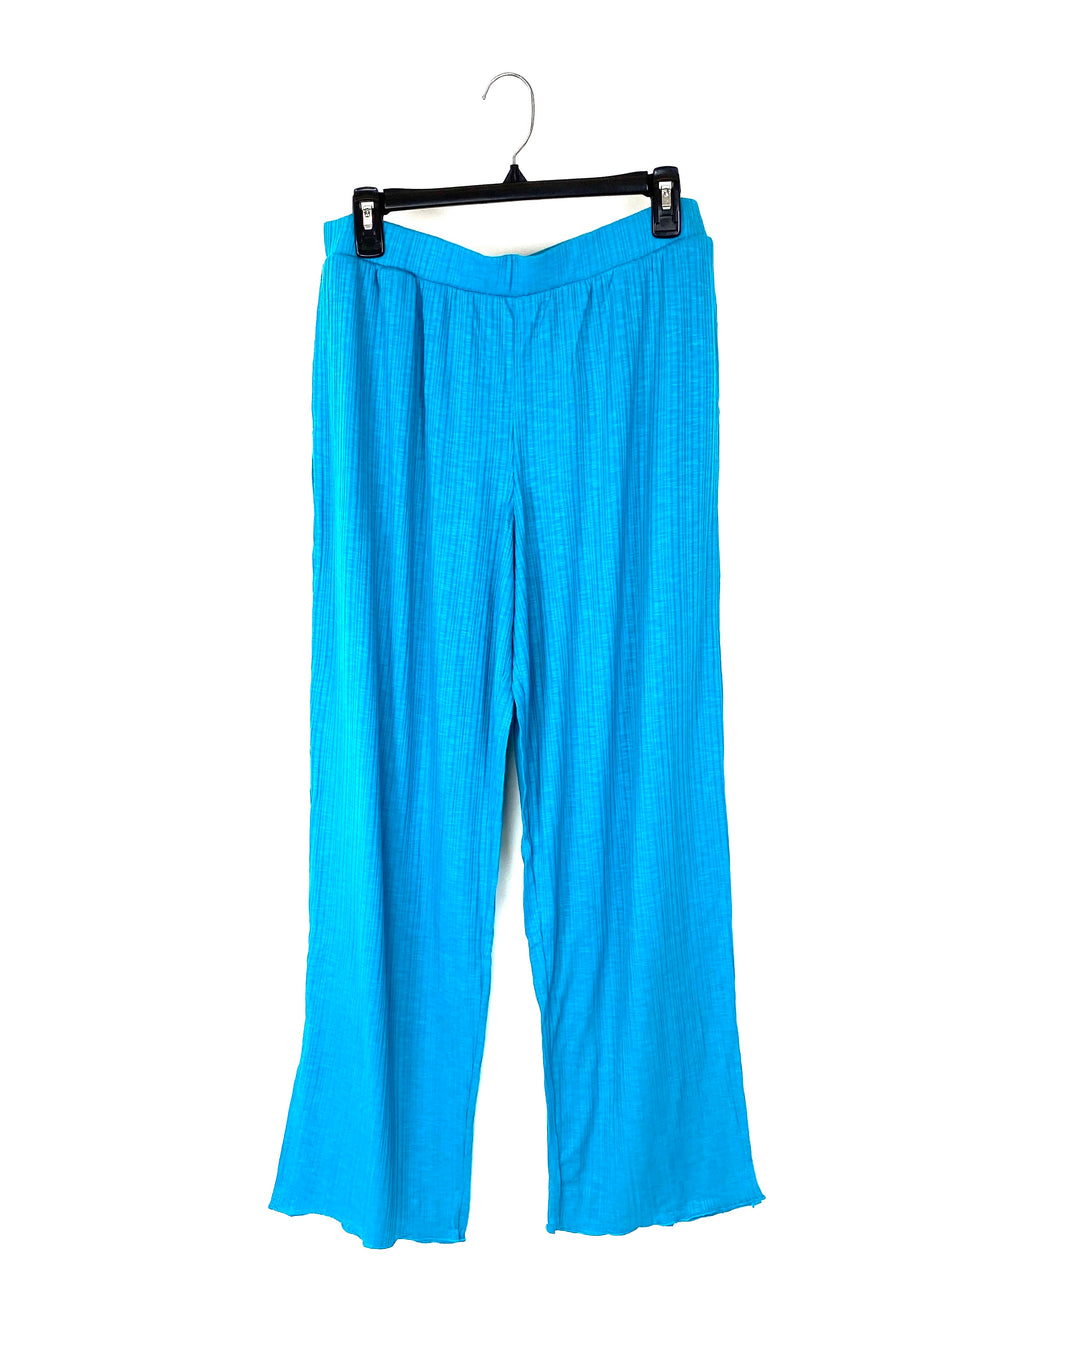 Bright Blue Flowy Pants - Small/Medium